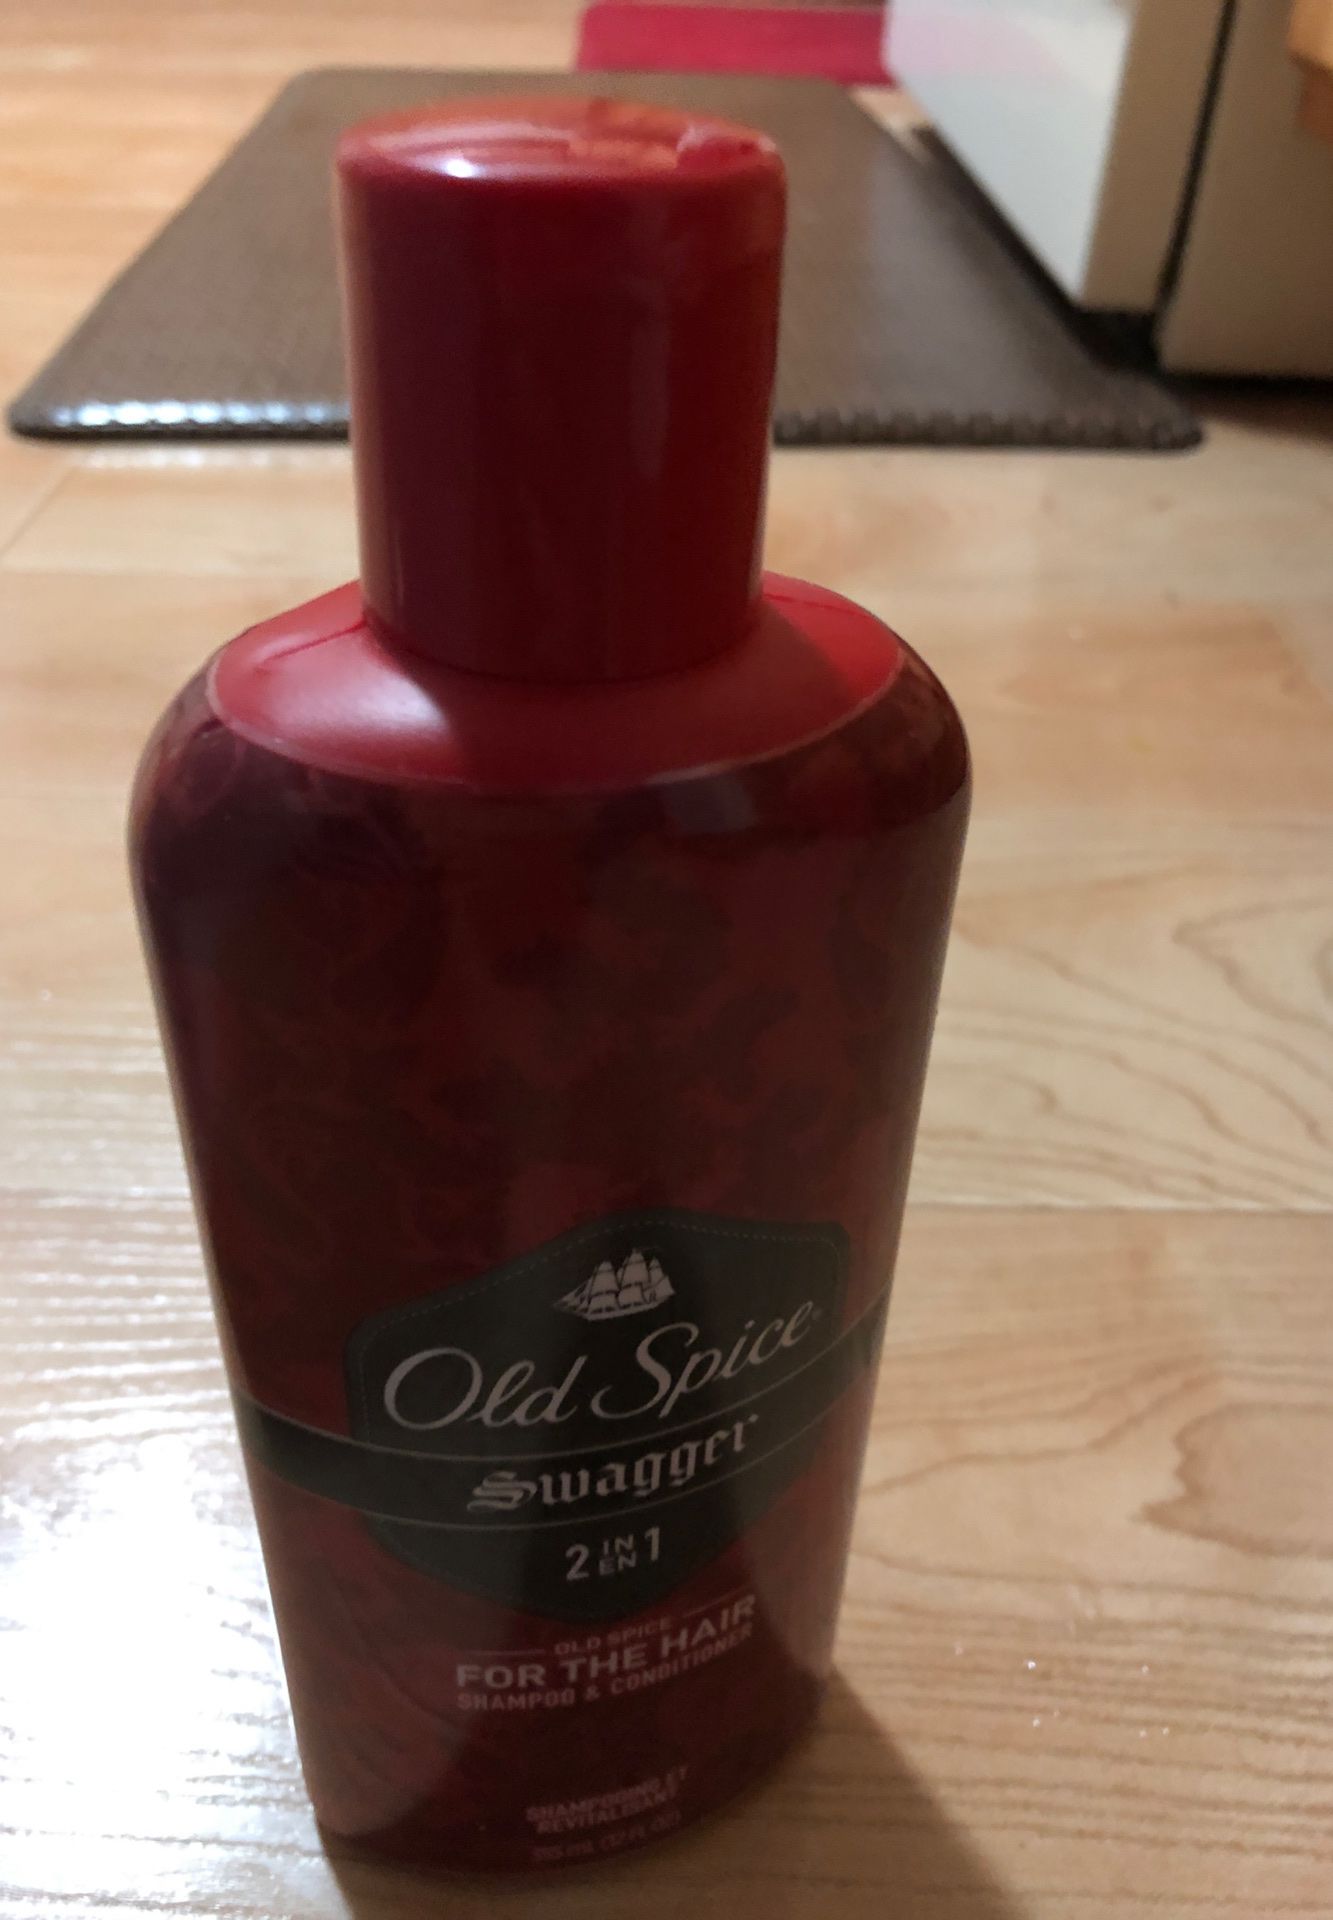 Old Spice shampoo/conditioner